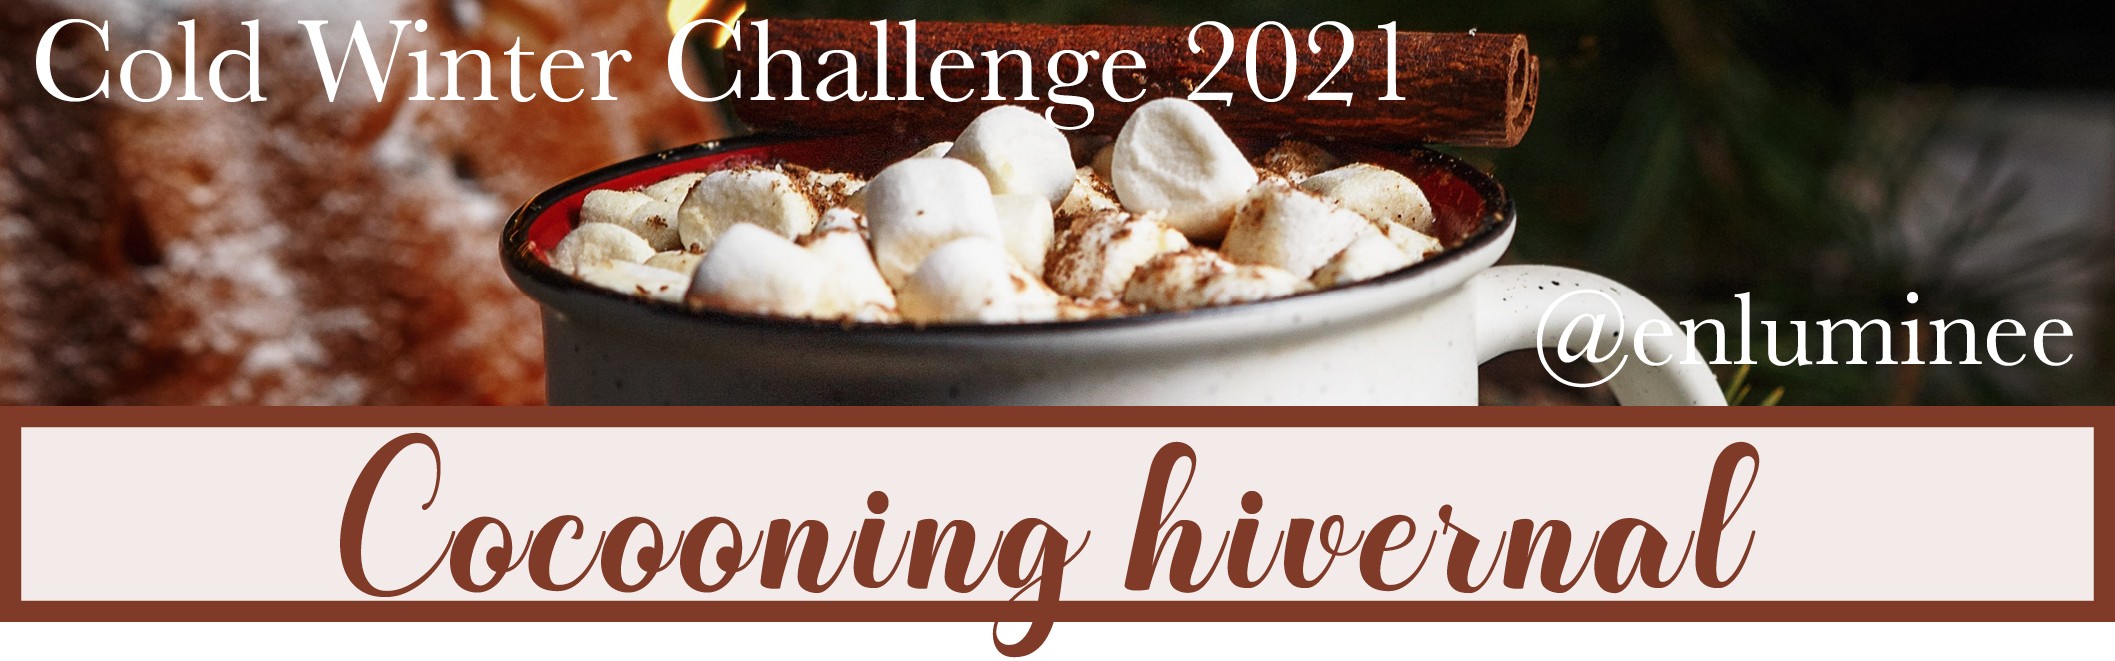 Cold Winter Challenge 2021 - Cocooning hivernal